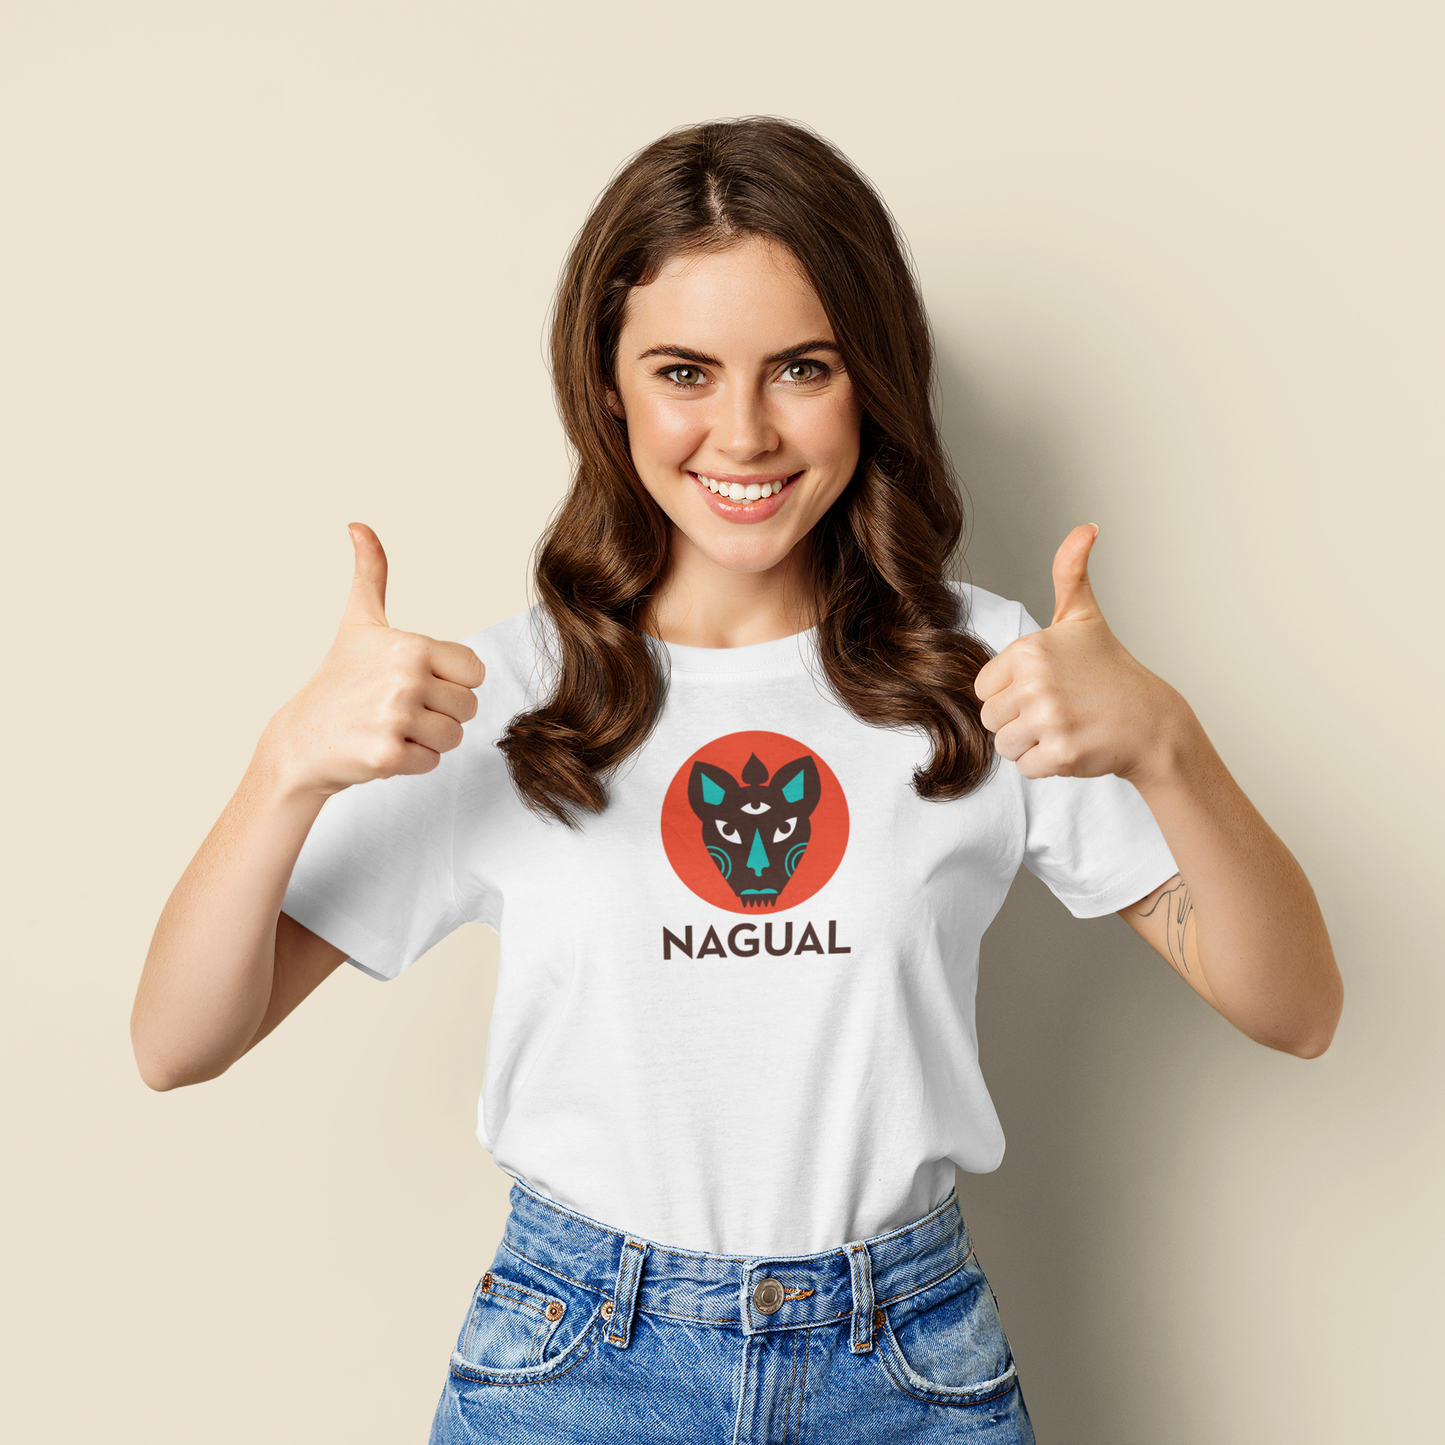 Nagual T-shirt